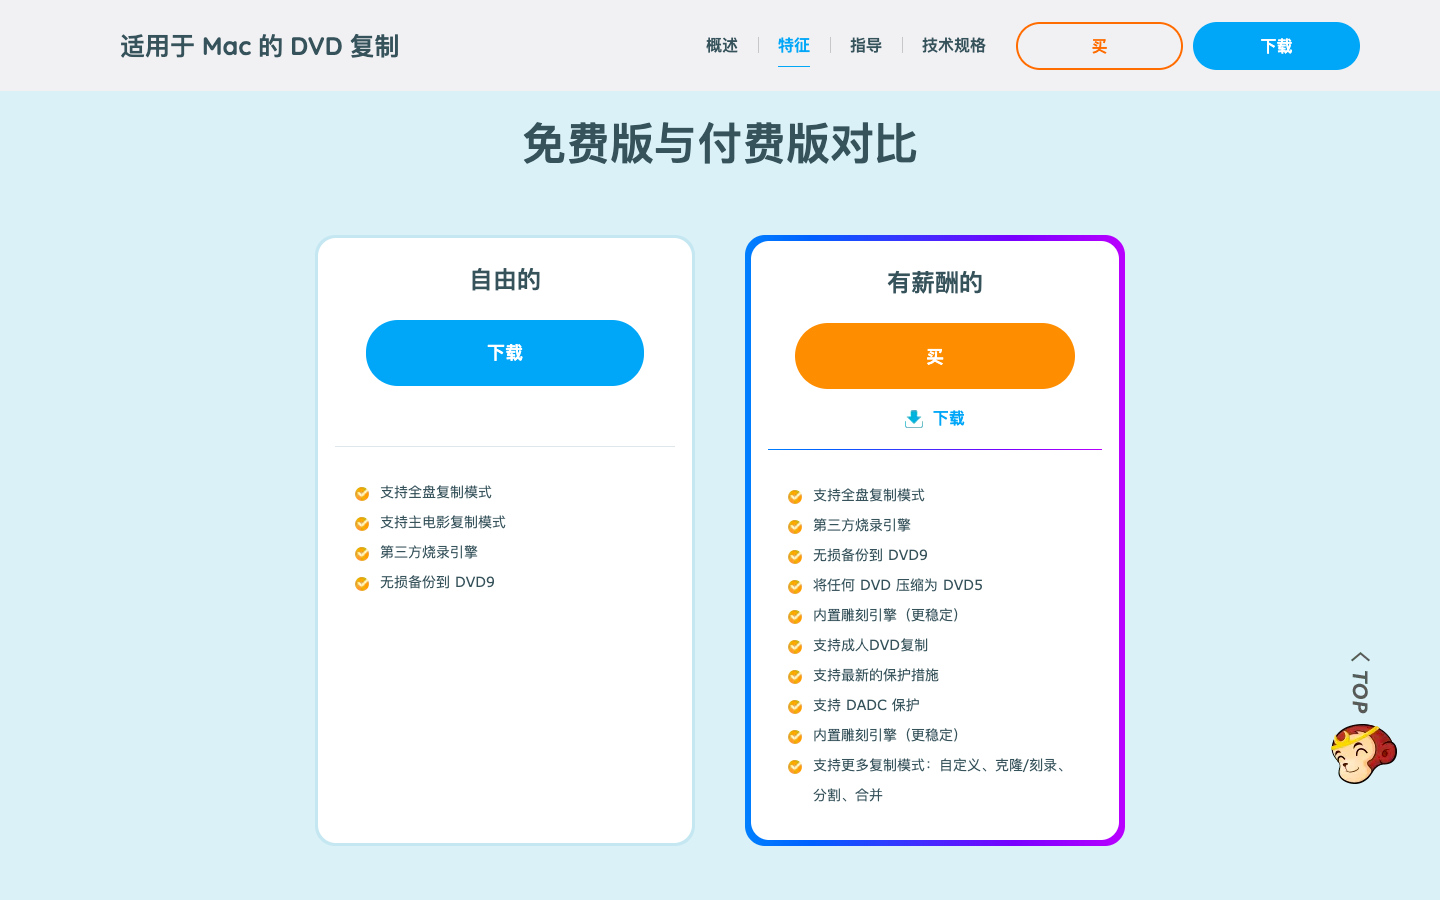 DVDFab DVD Copy—DVD复制